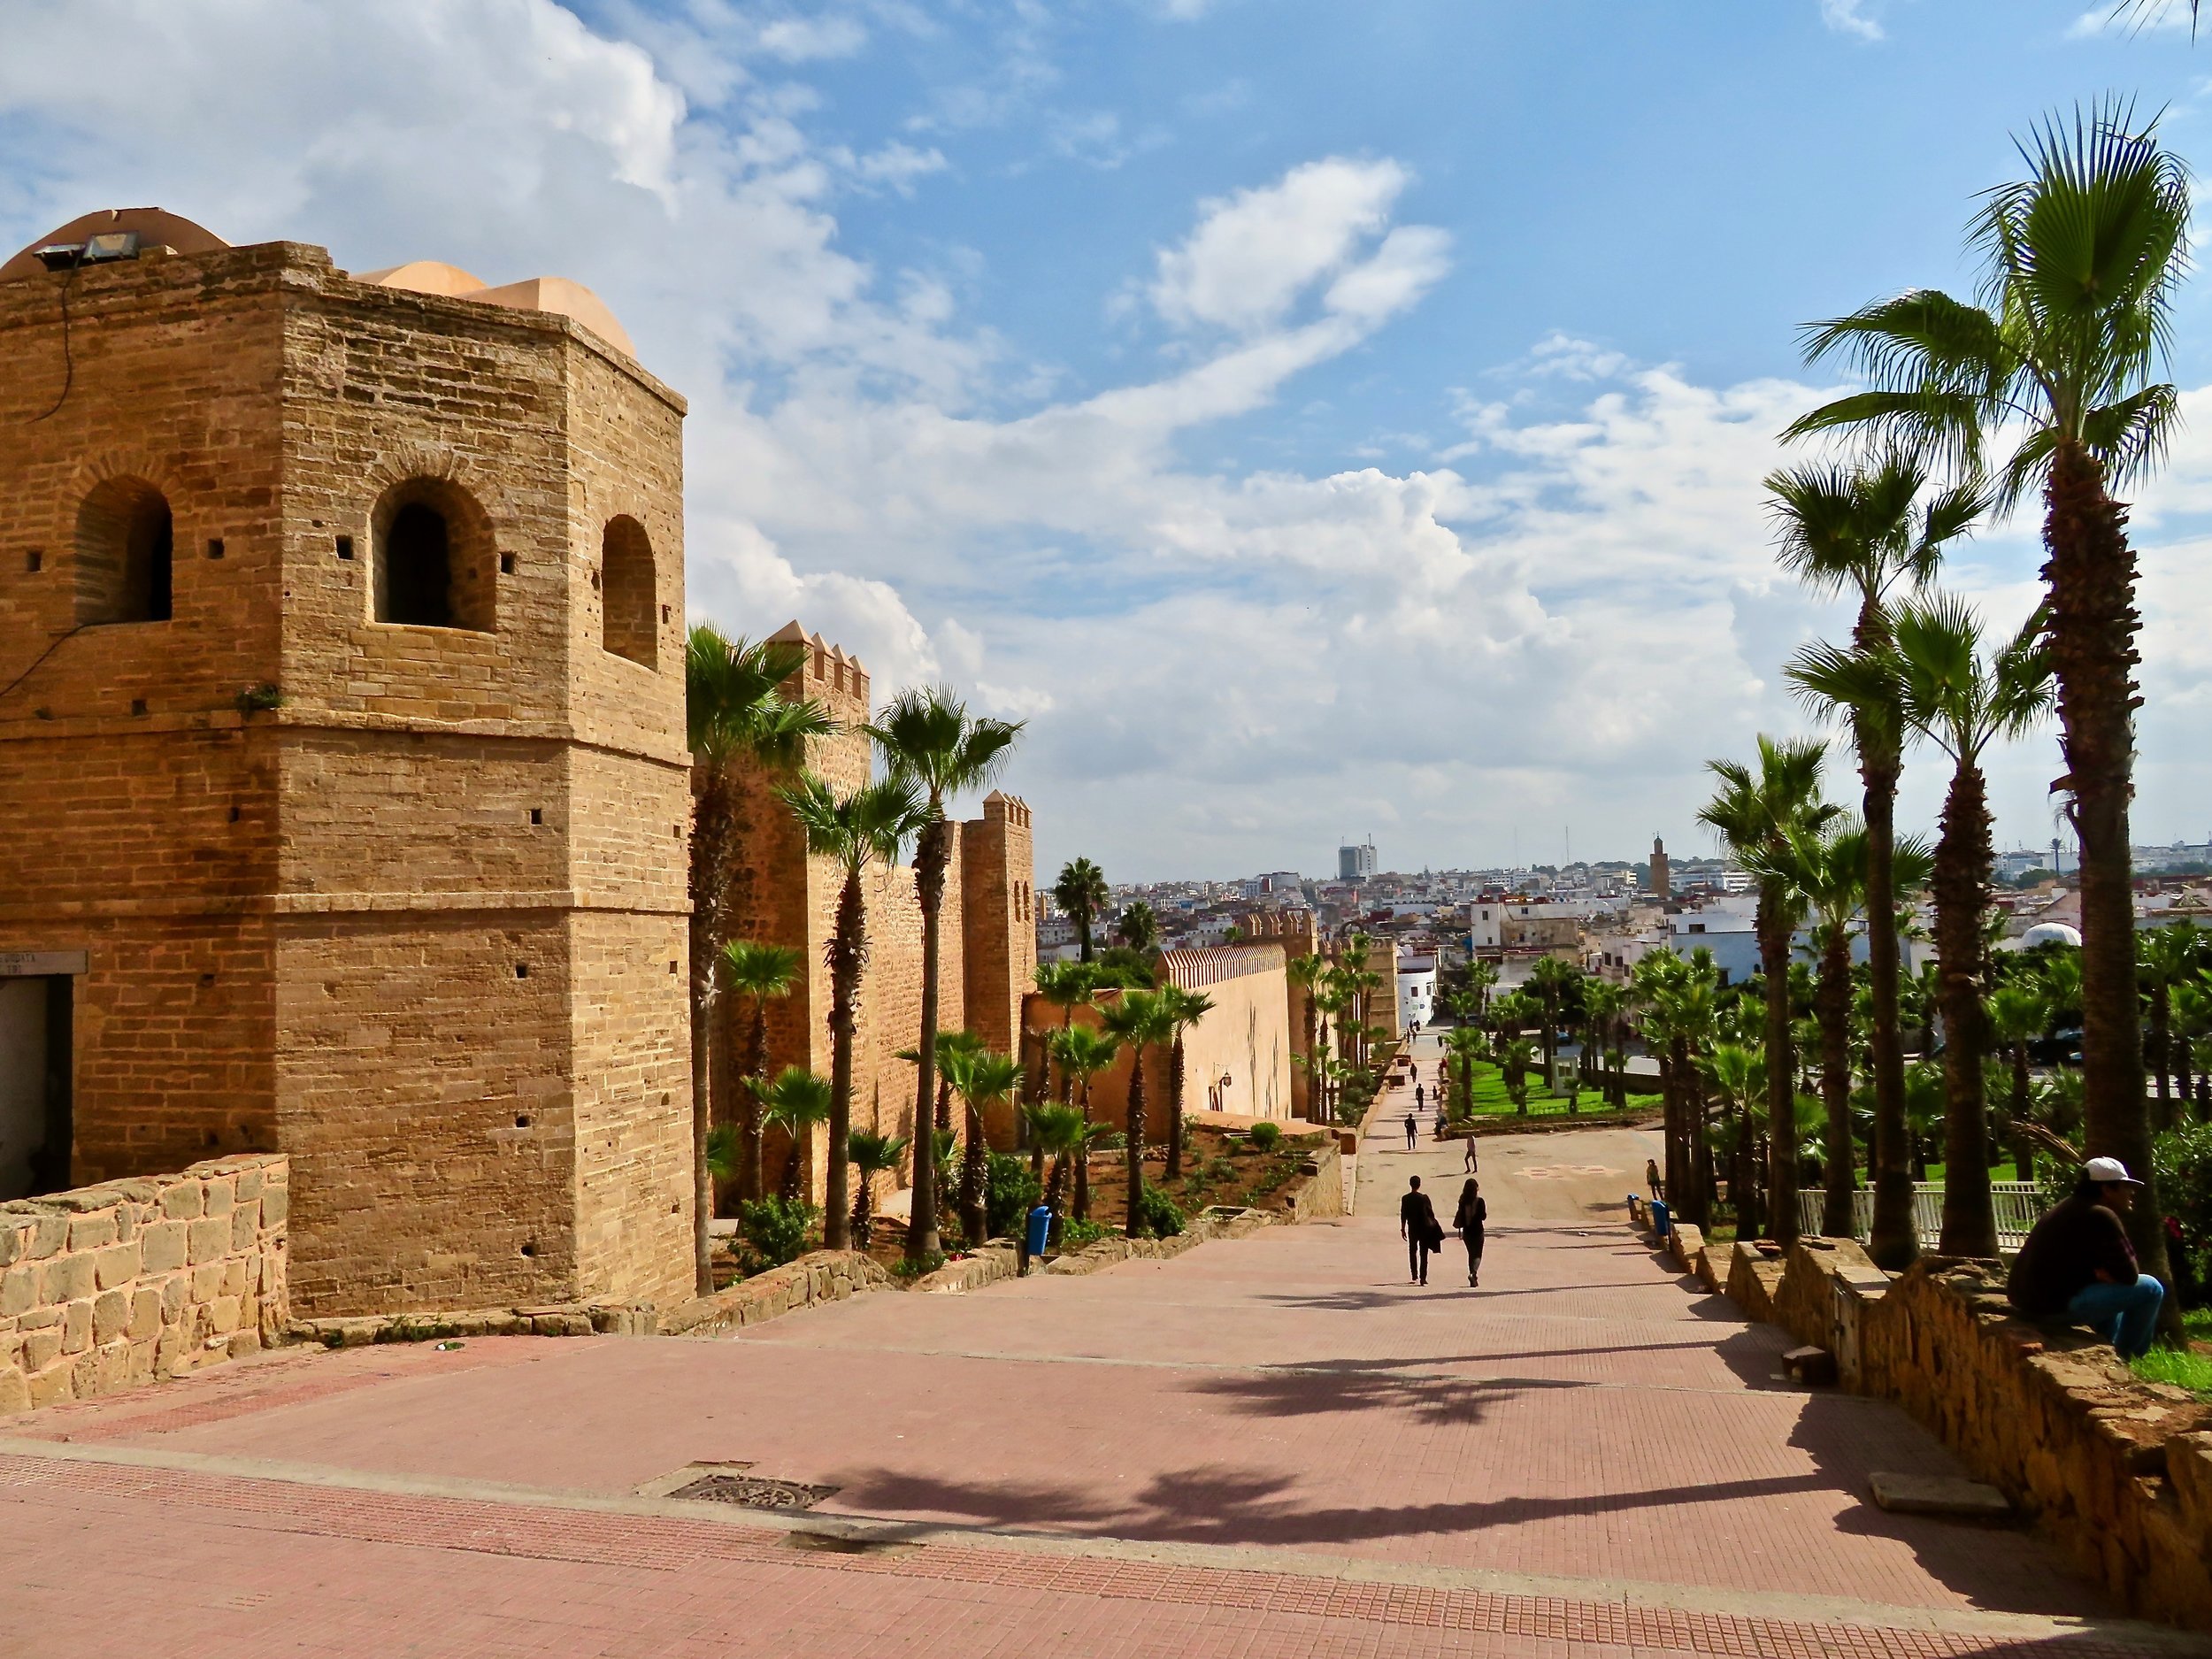 The walls of the kasbah, Meknès